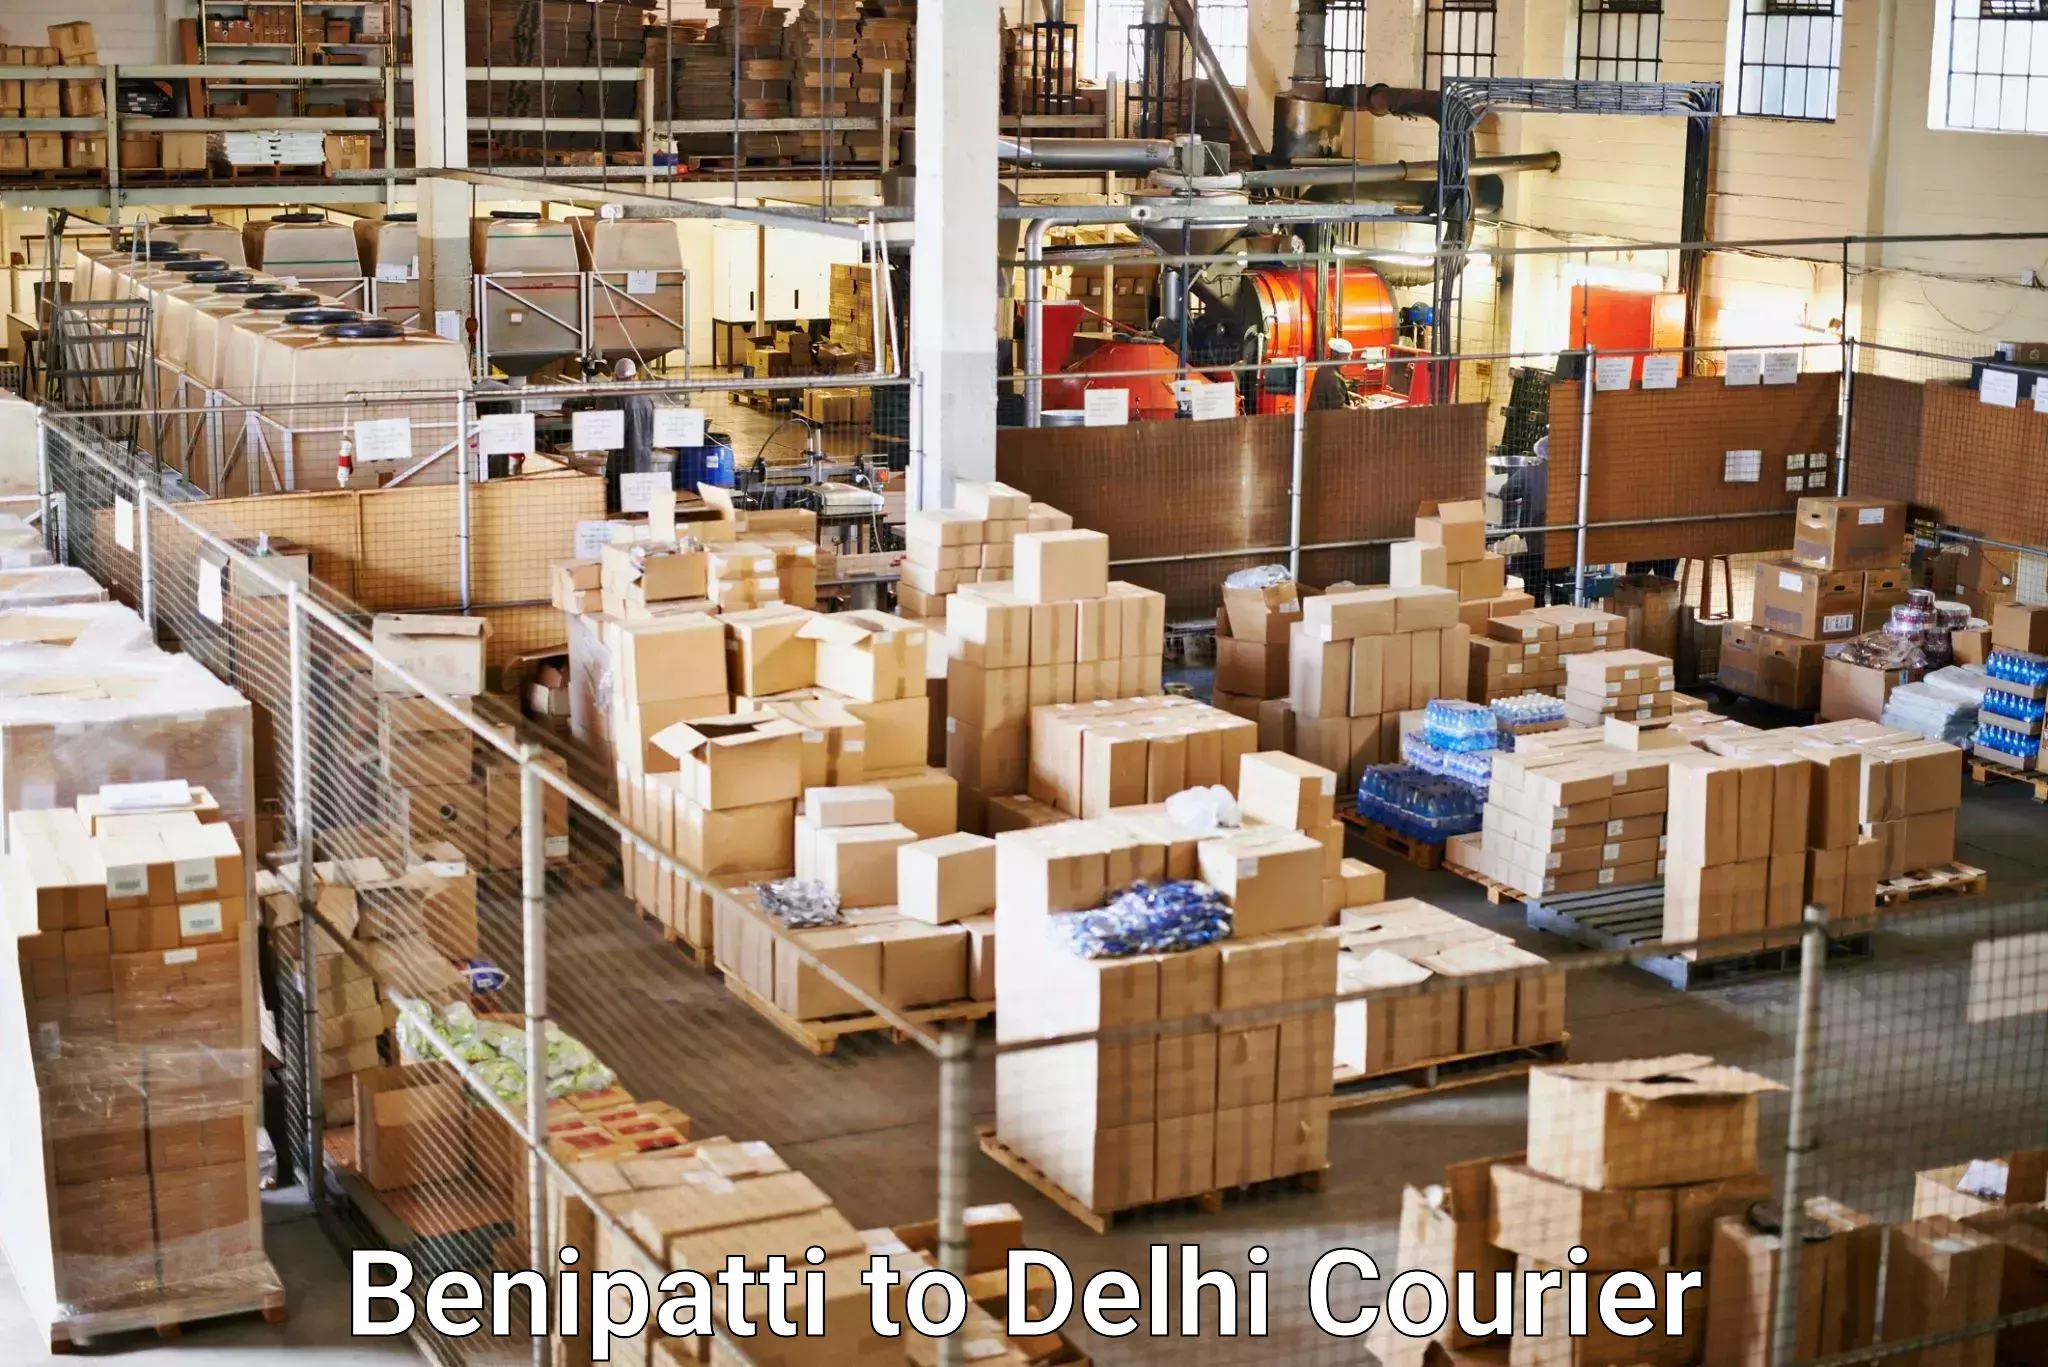 Digital courier platforms Benipatti to Delhi